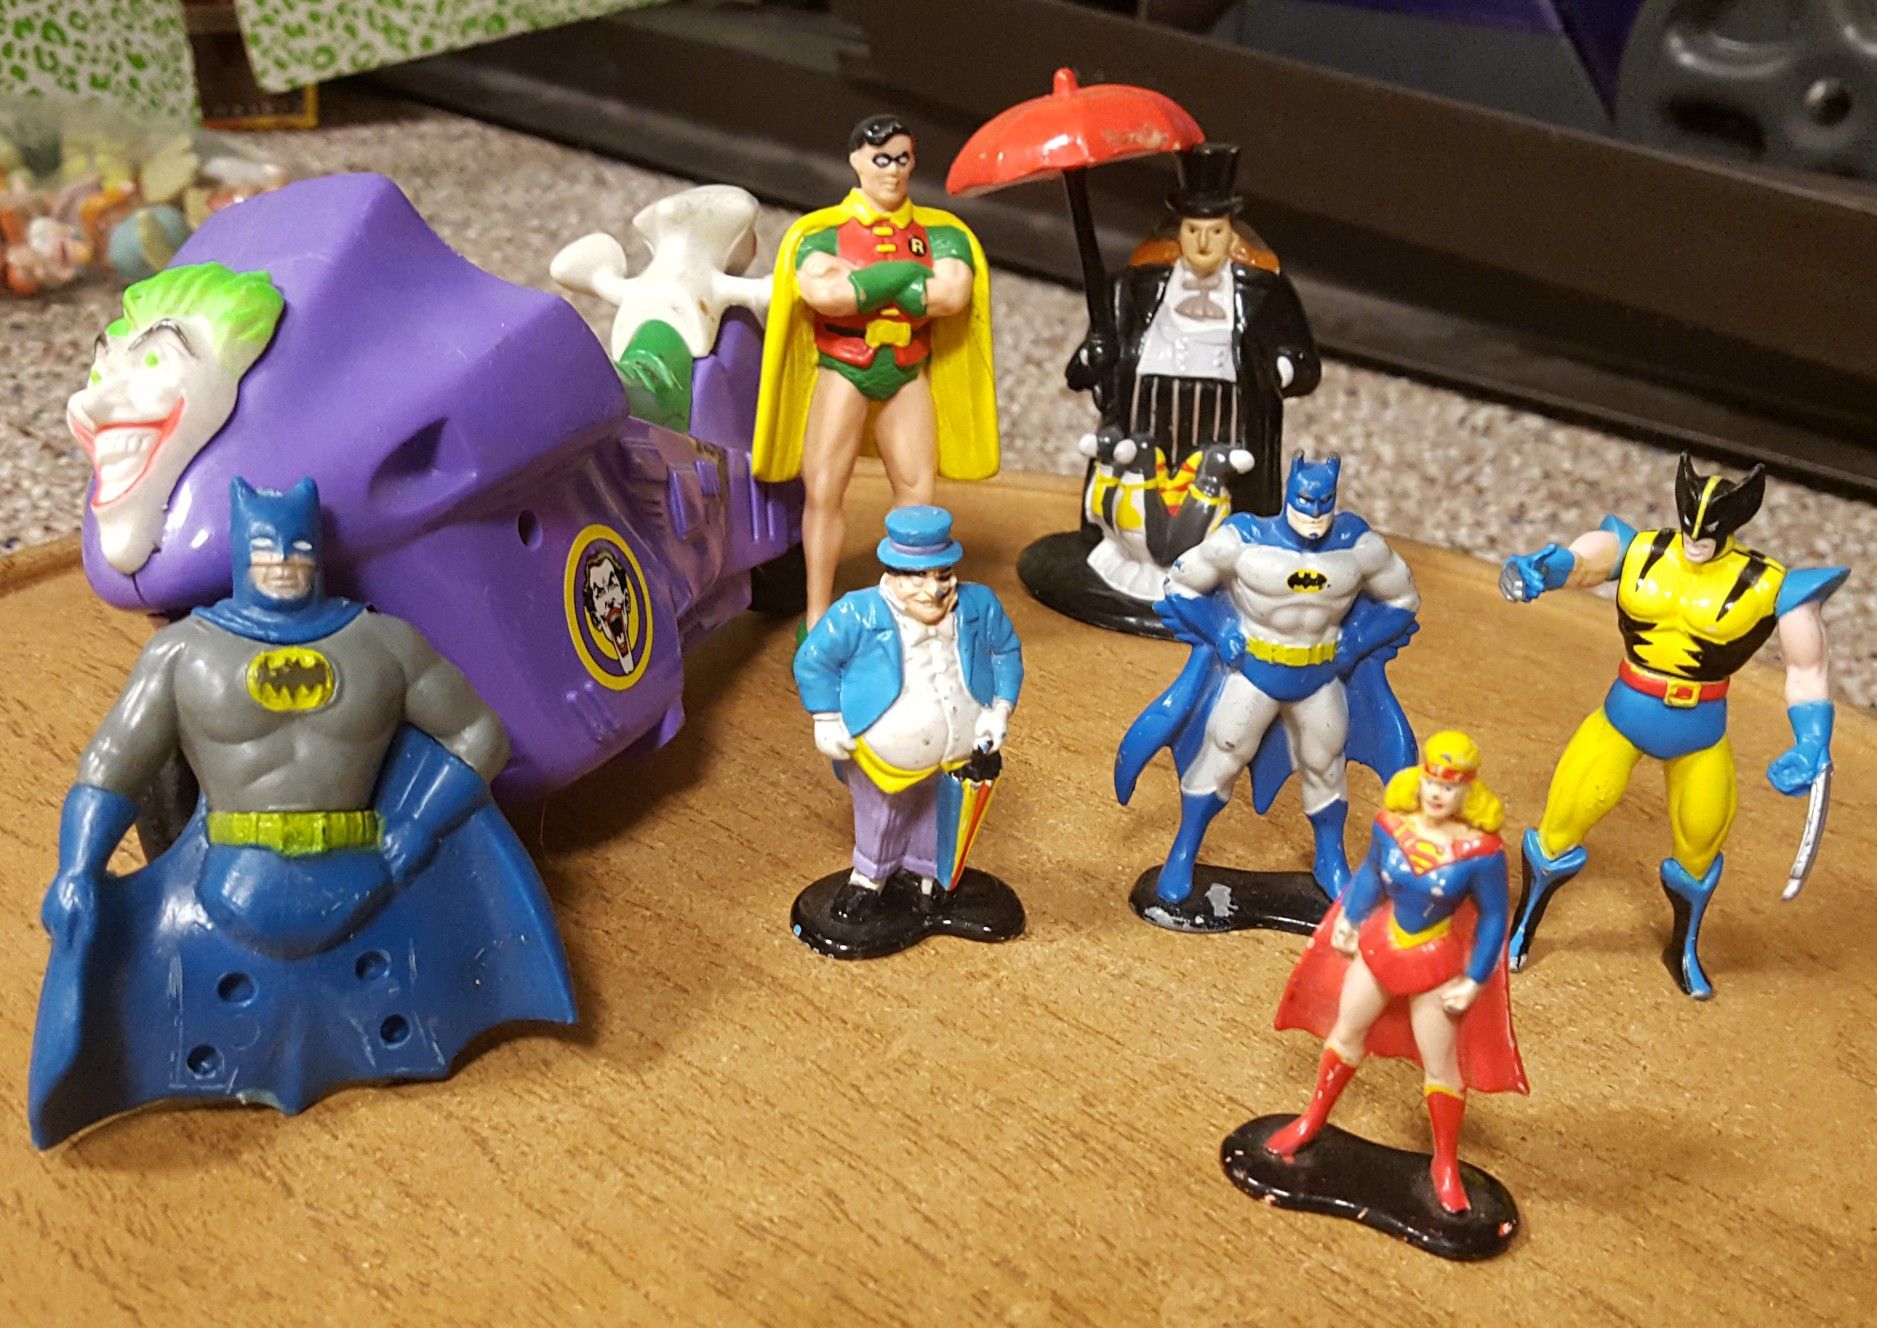 Batman figurines